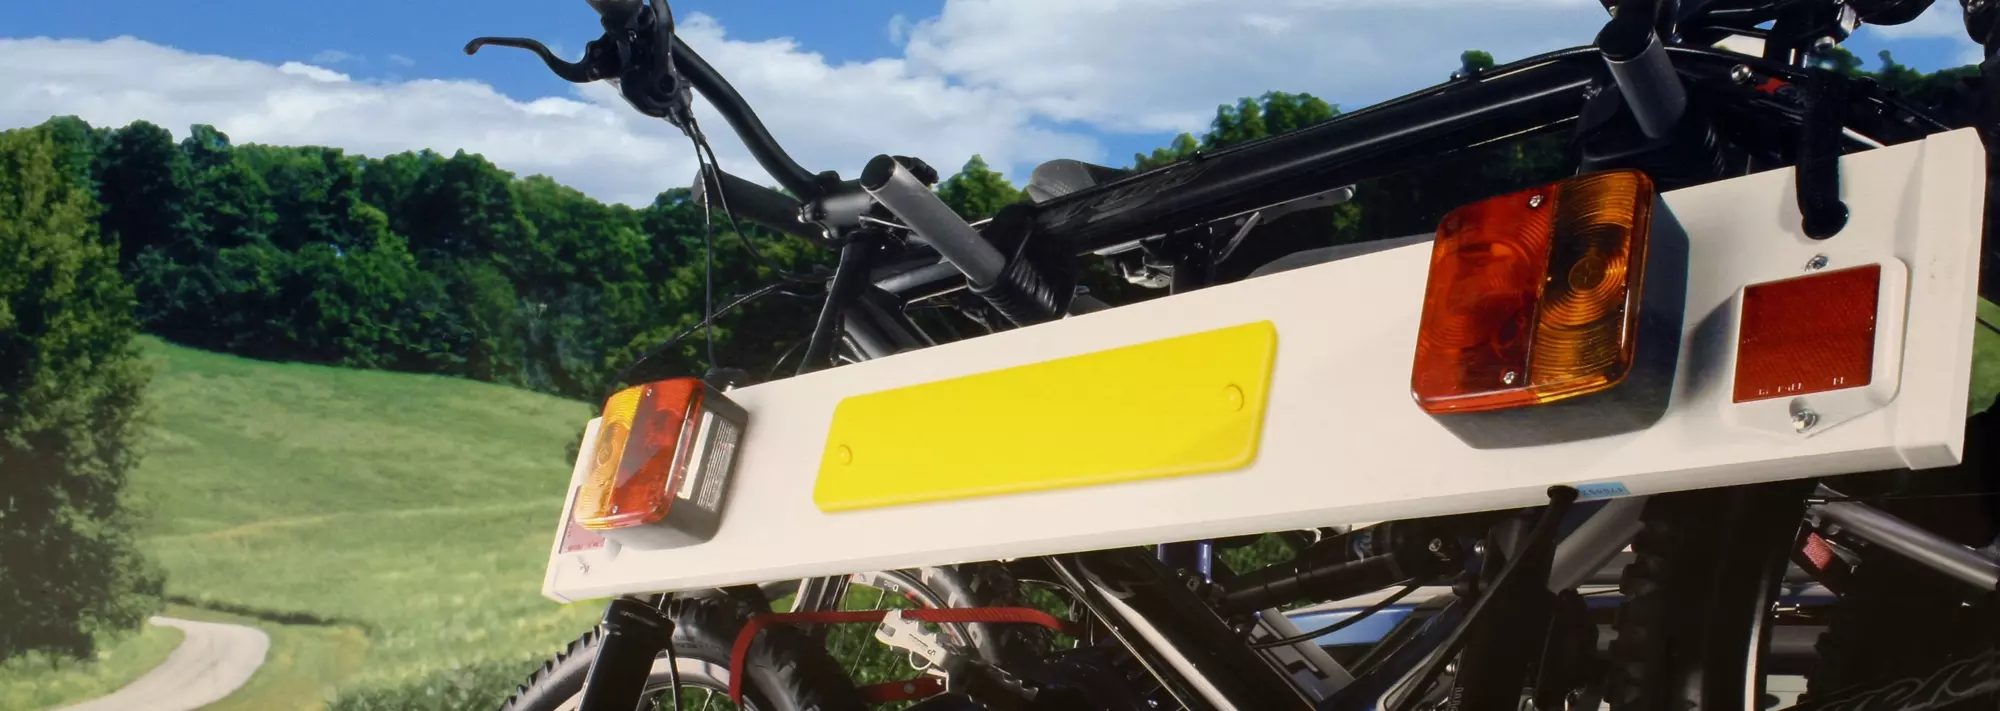 bike rack lights